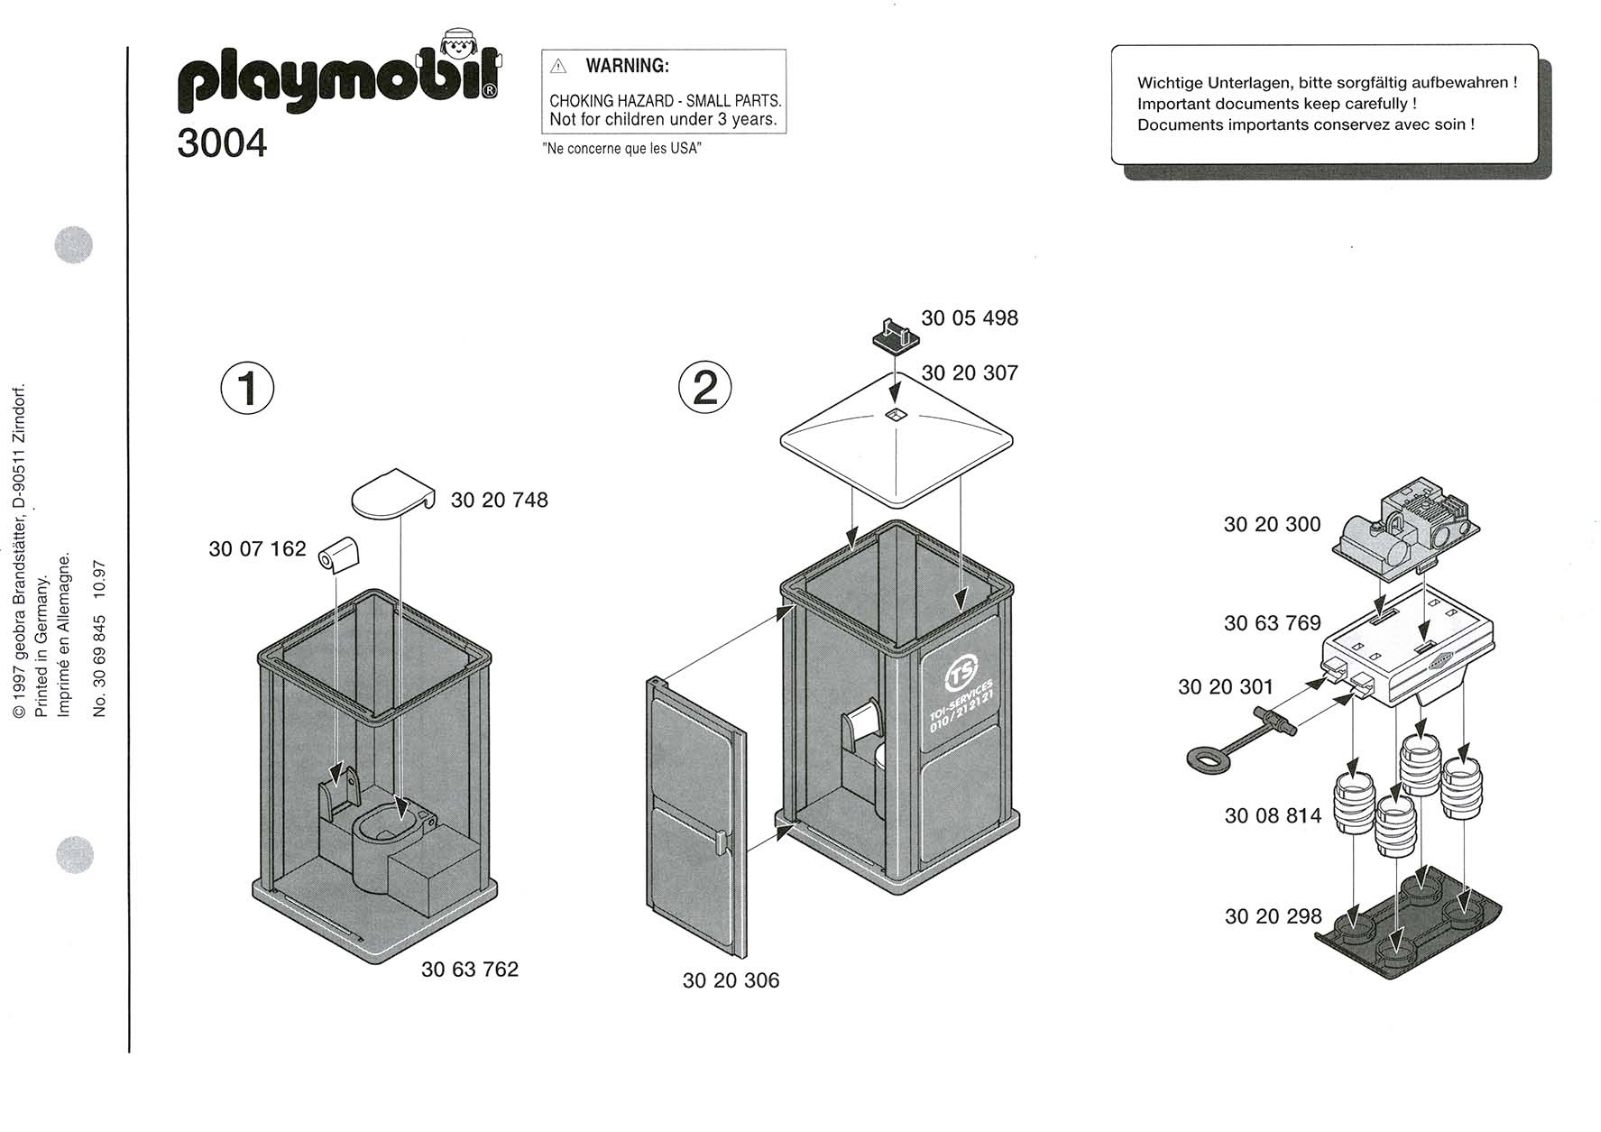 Playmobil 3004 Instructions